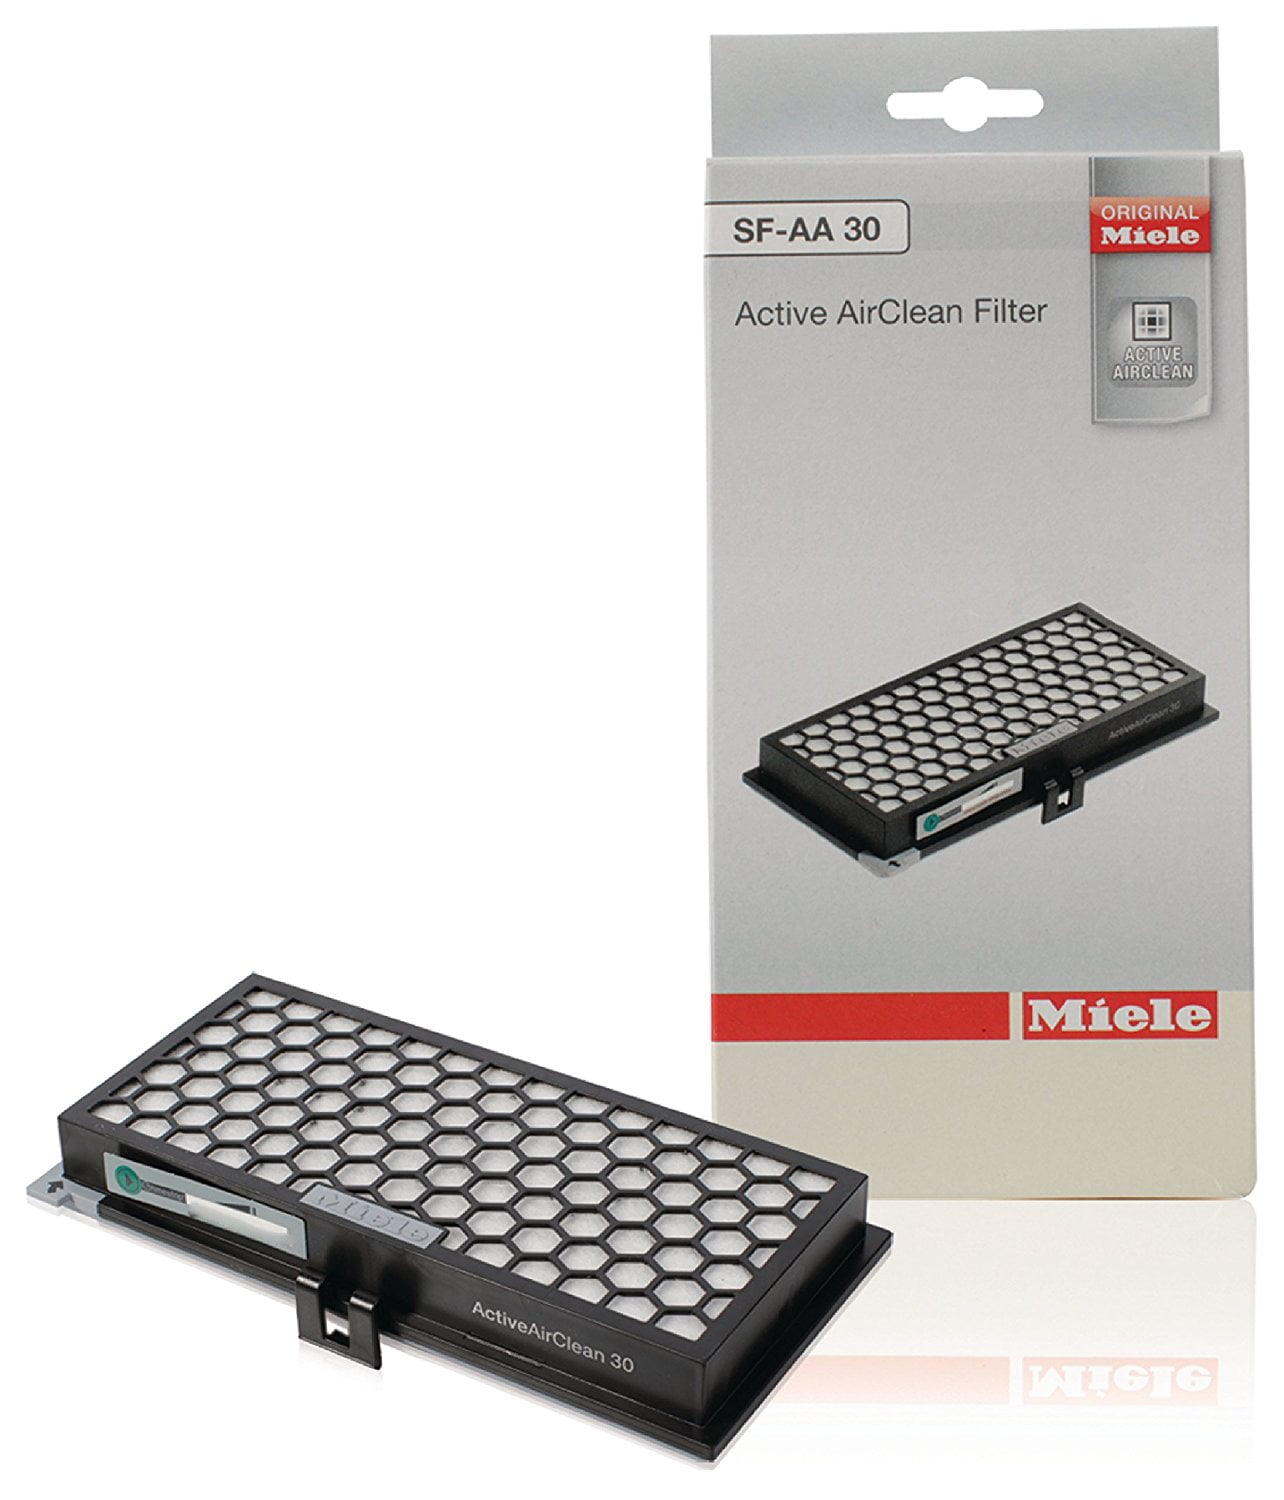 Active AirClean Filter SF-AA 30 for Miele Electronic 2111 SF-HA 30, SF-AH 30 